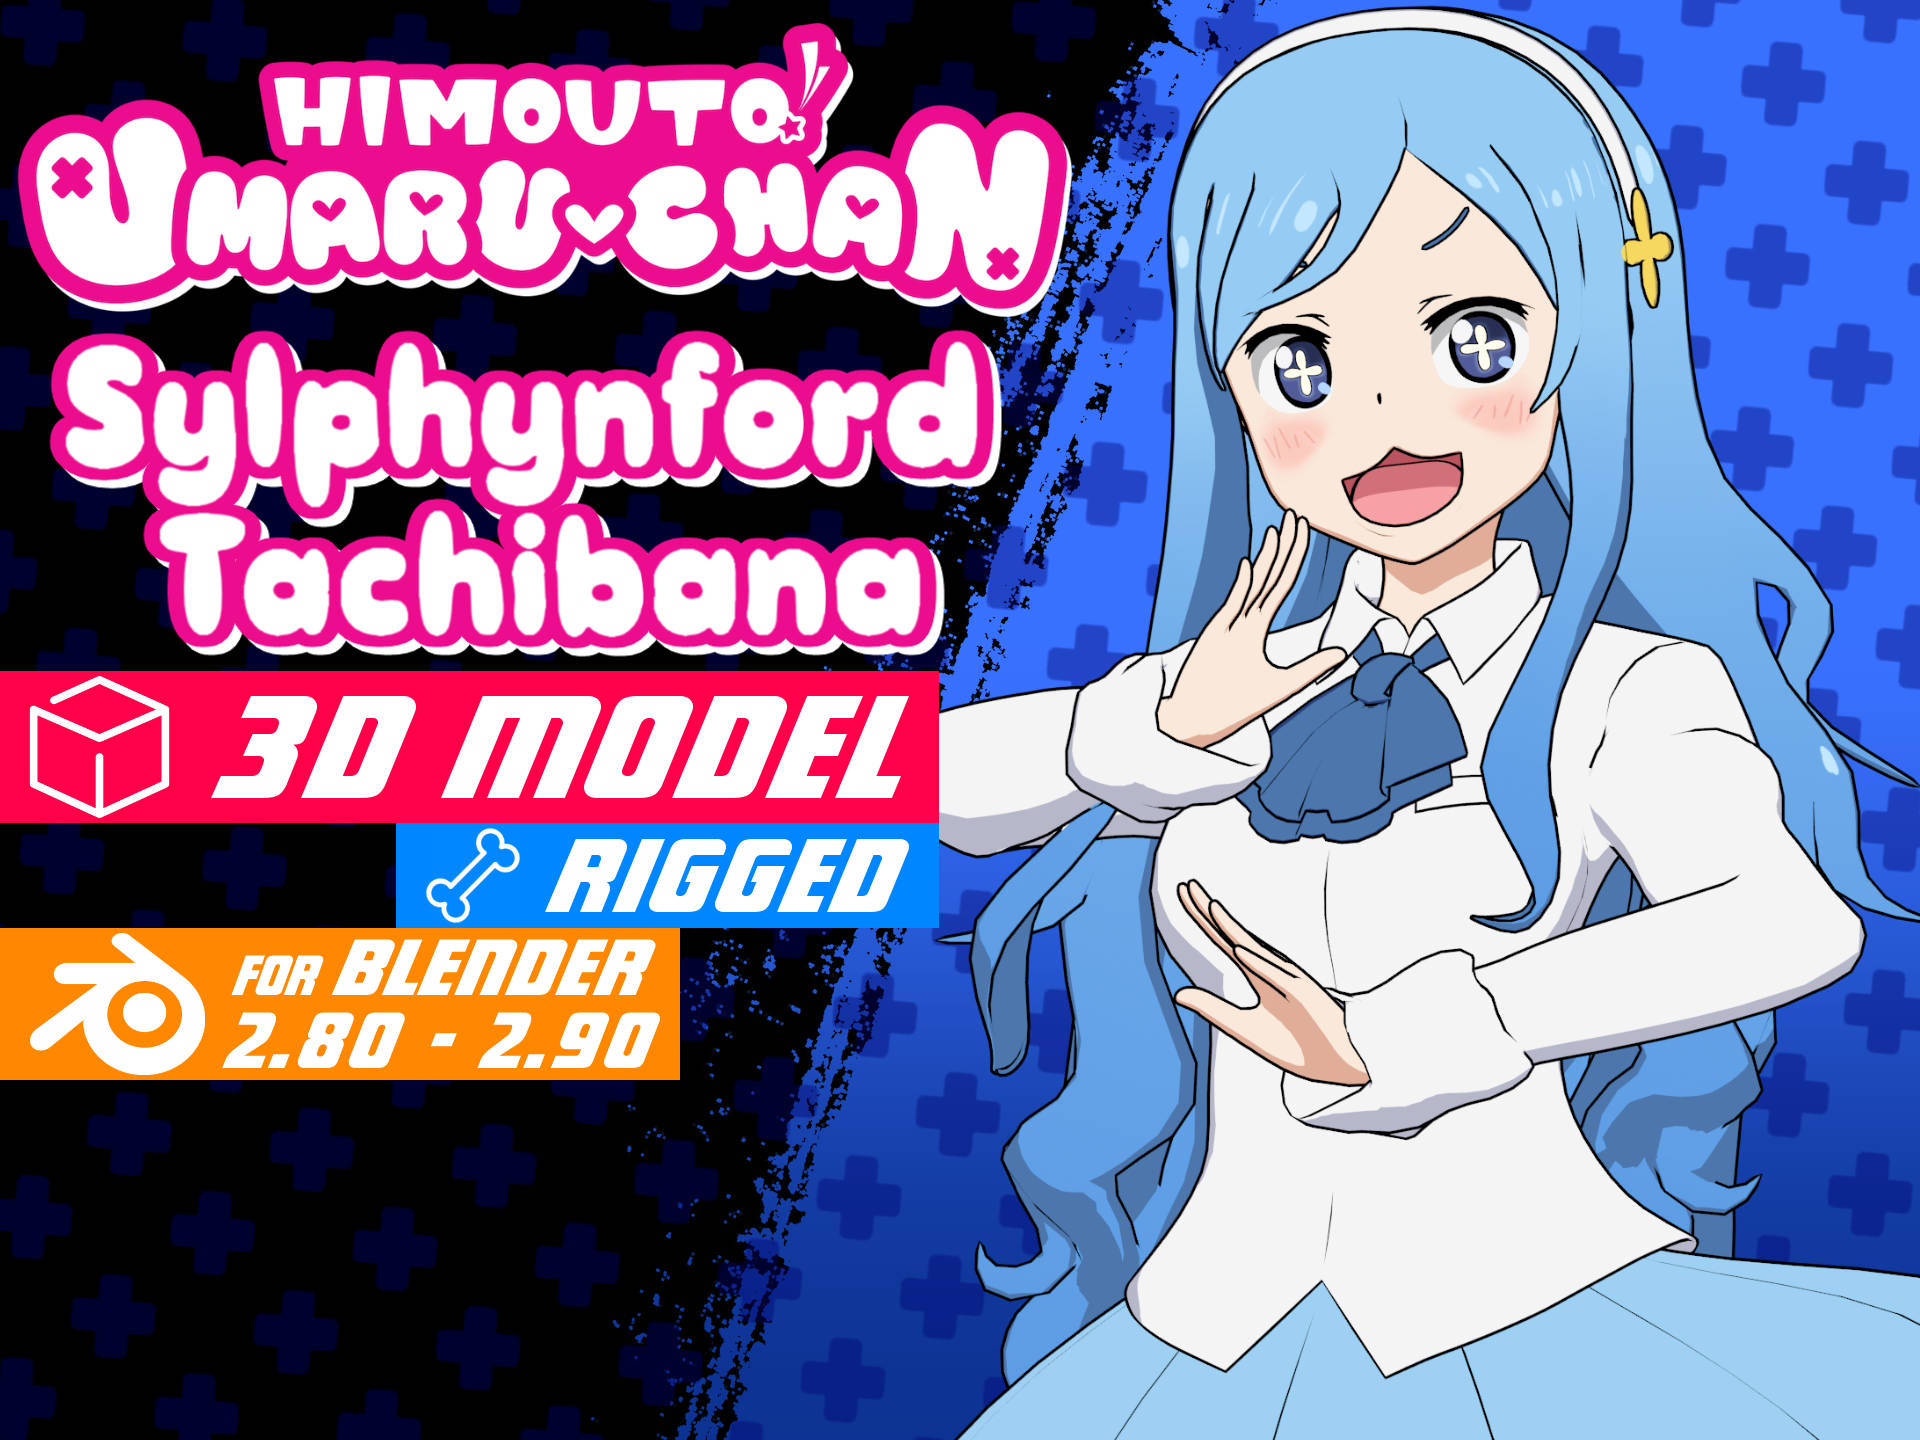 Rem by Re zero anime Model 3D for blender by GilsonAnimes on